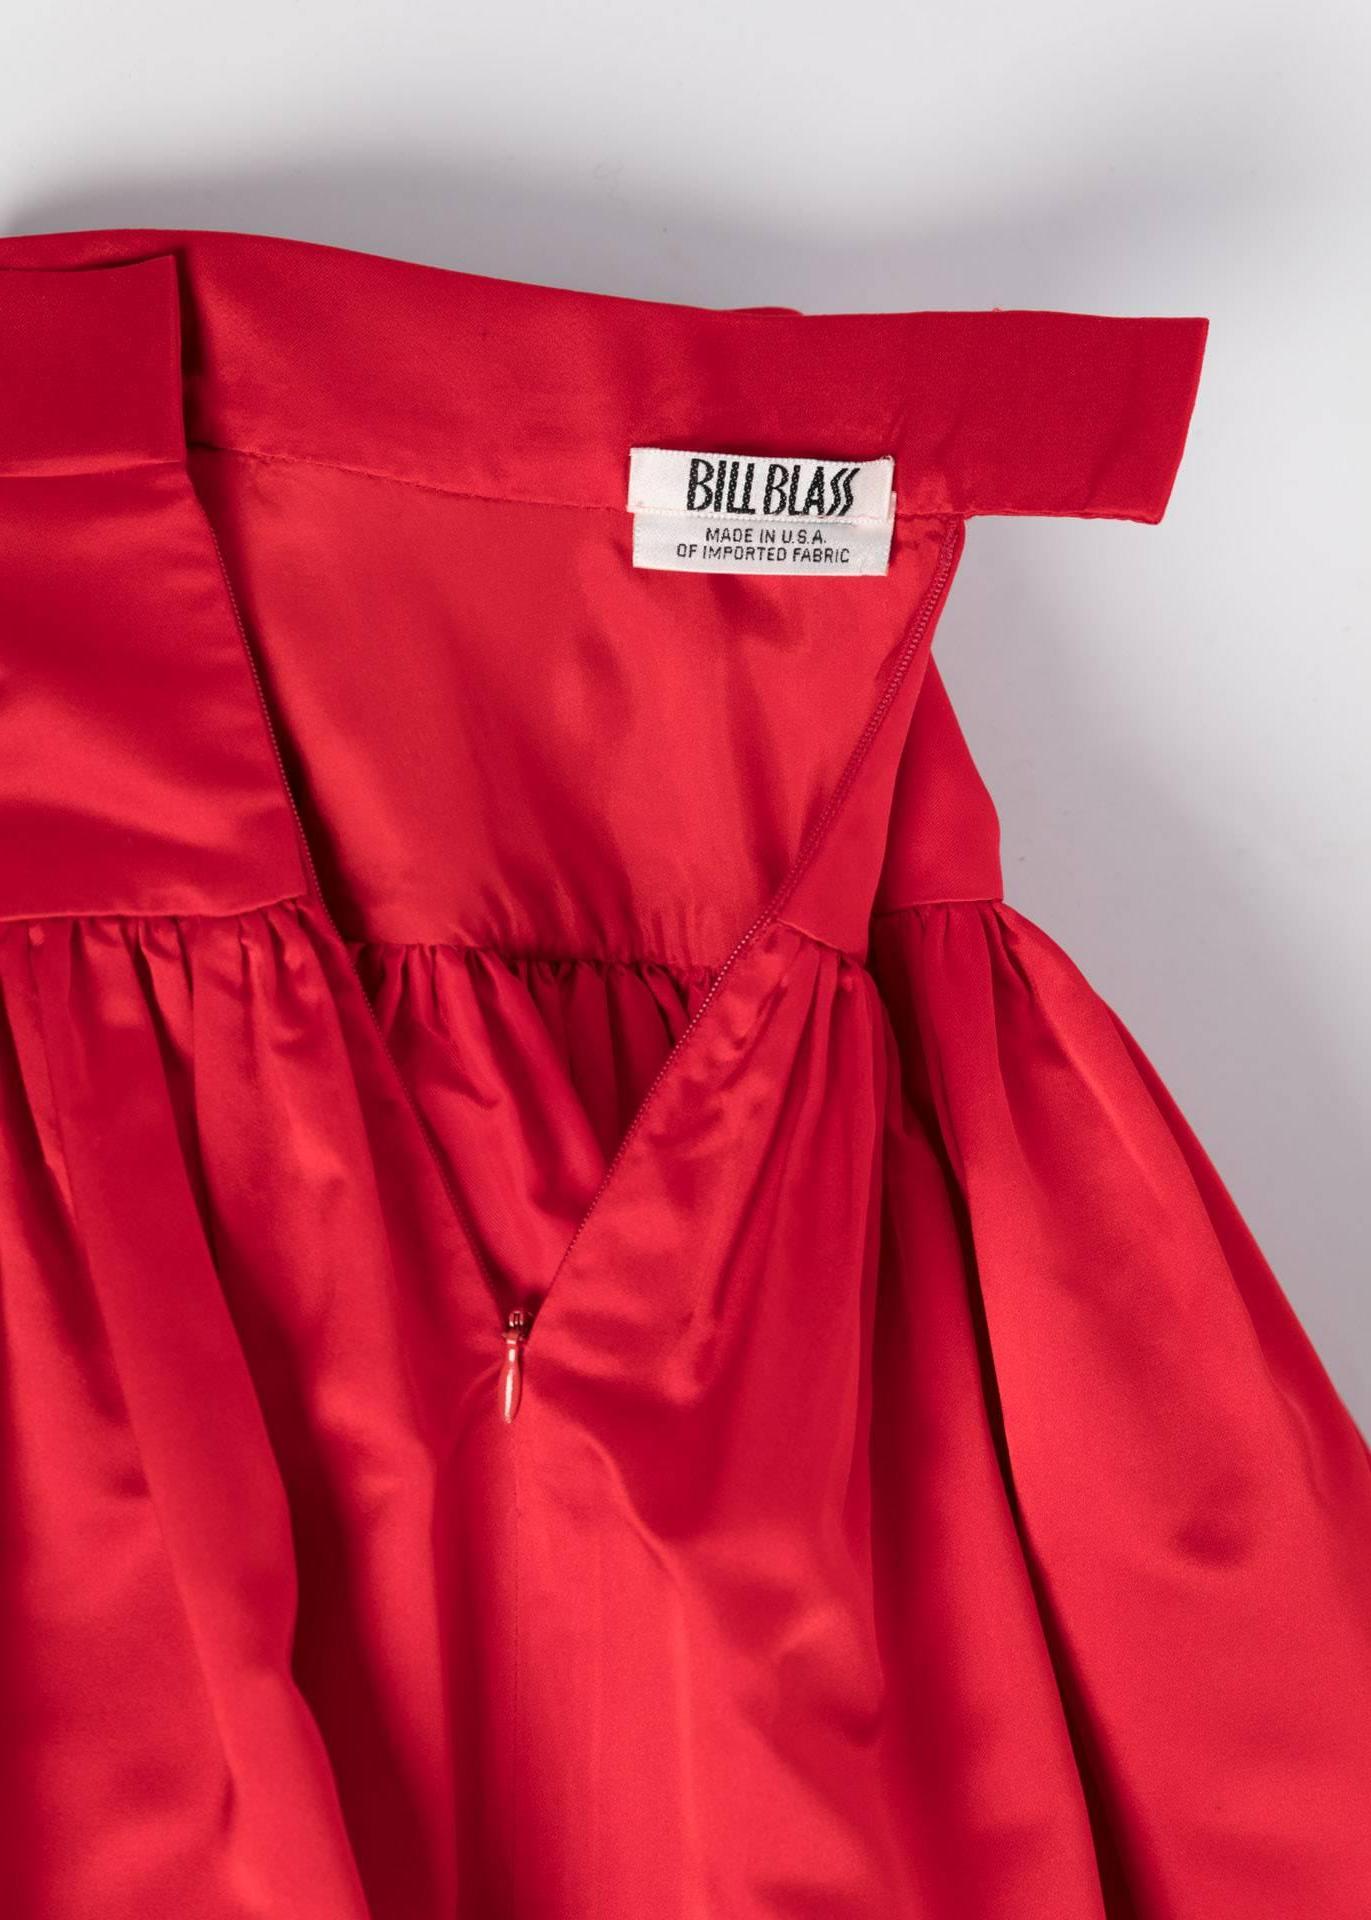 Vintage Bill Blass Crimson Red Satin Ball Gown Skirt 1